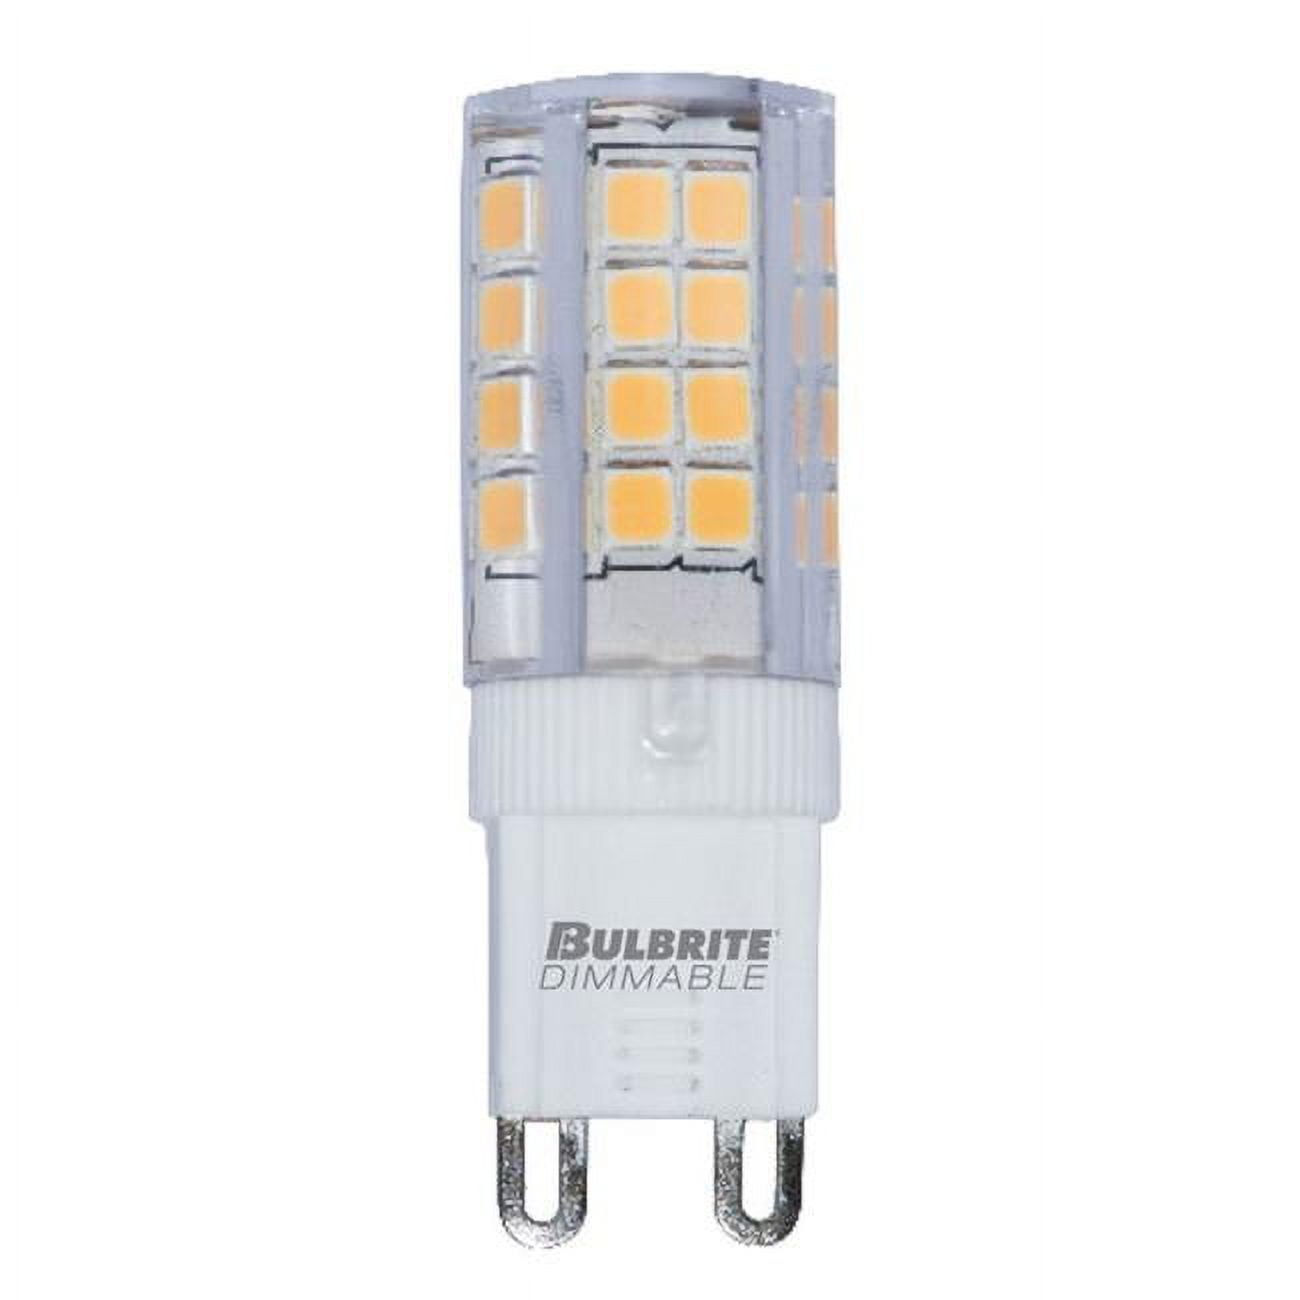 Picture of Bulbrite Pack of (2) 4.5 Watt 120V Dimmable Clear T6 LED Mini Light Bulbs with Bi-Pin (G9) Base  2700K Warm White Light  400 Lumens